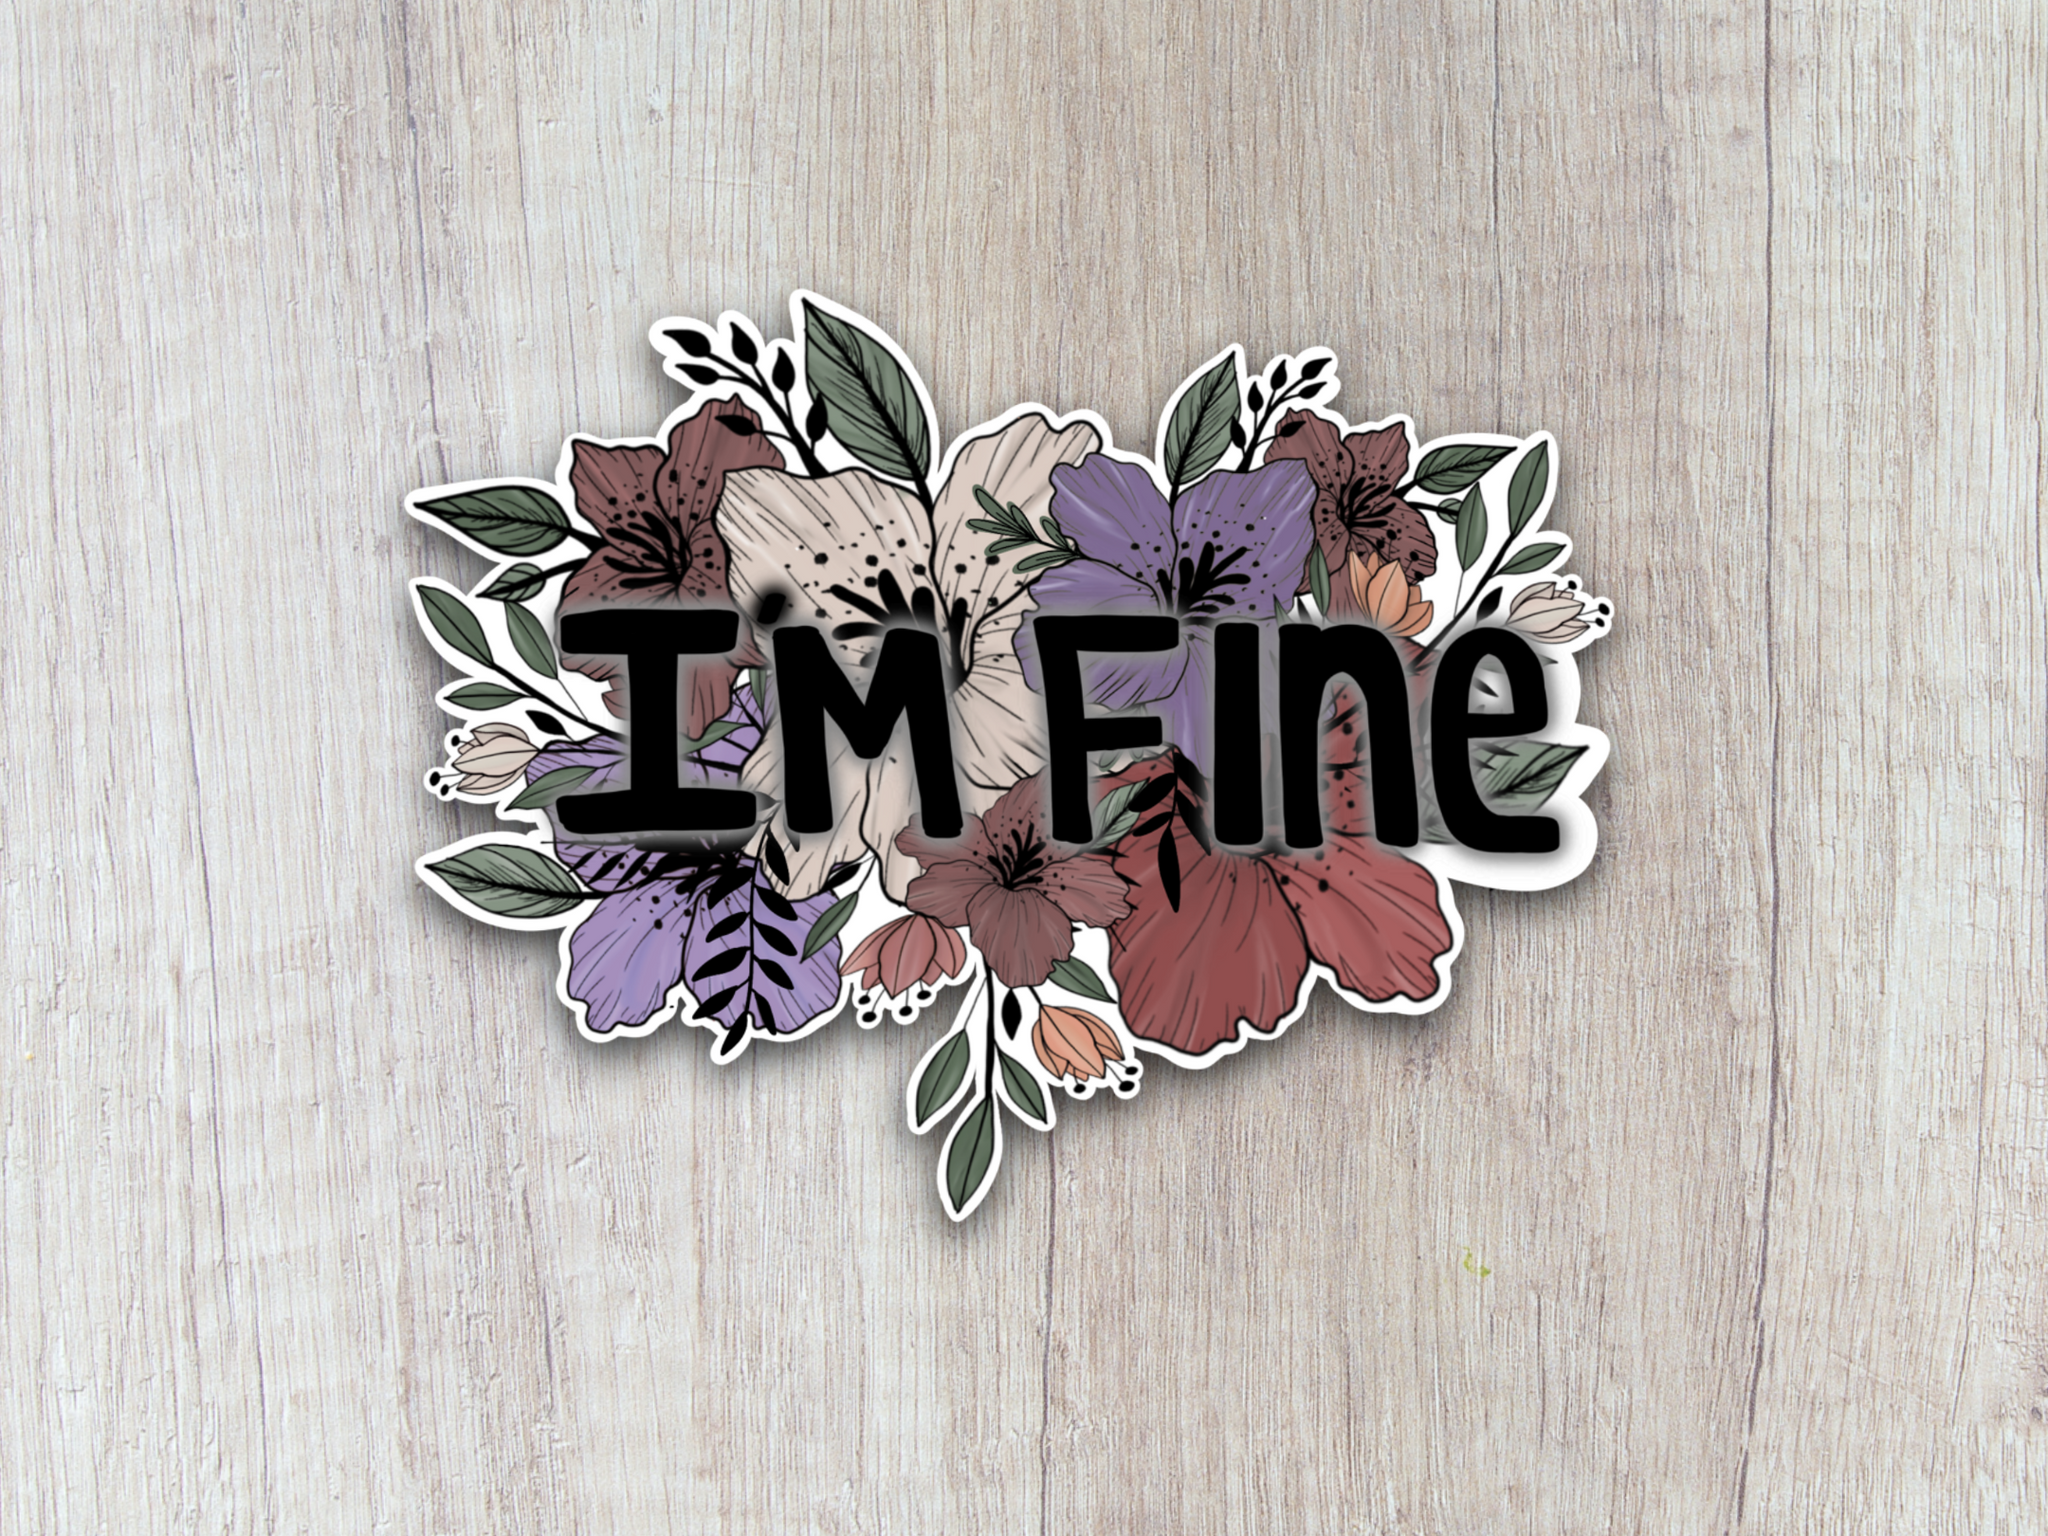 “I’m Fine” Sticker